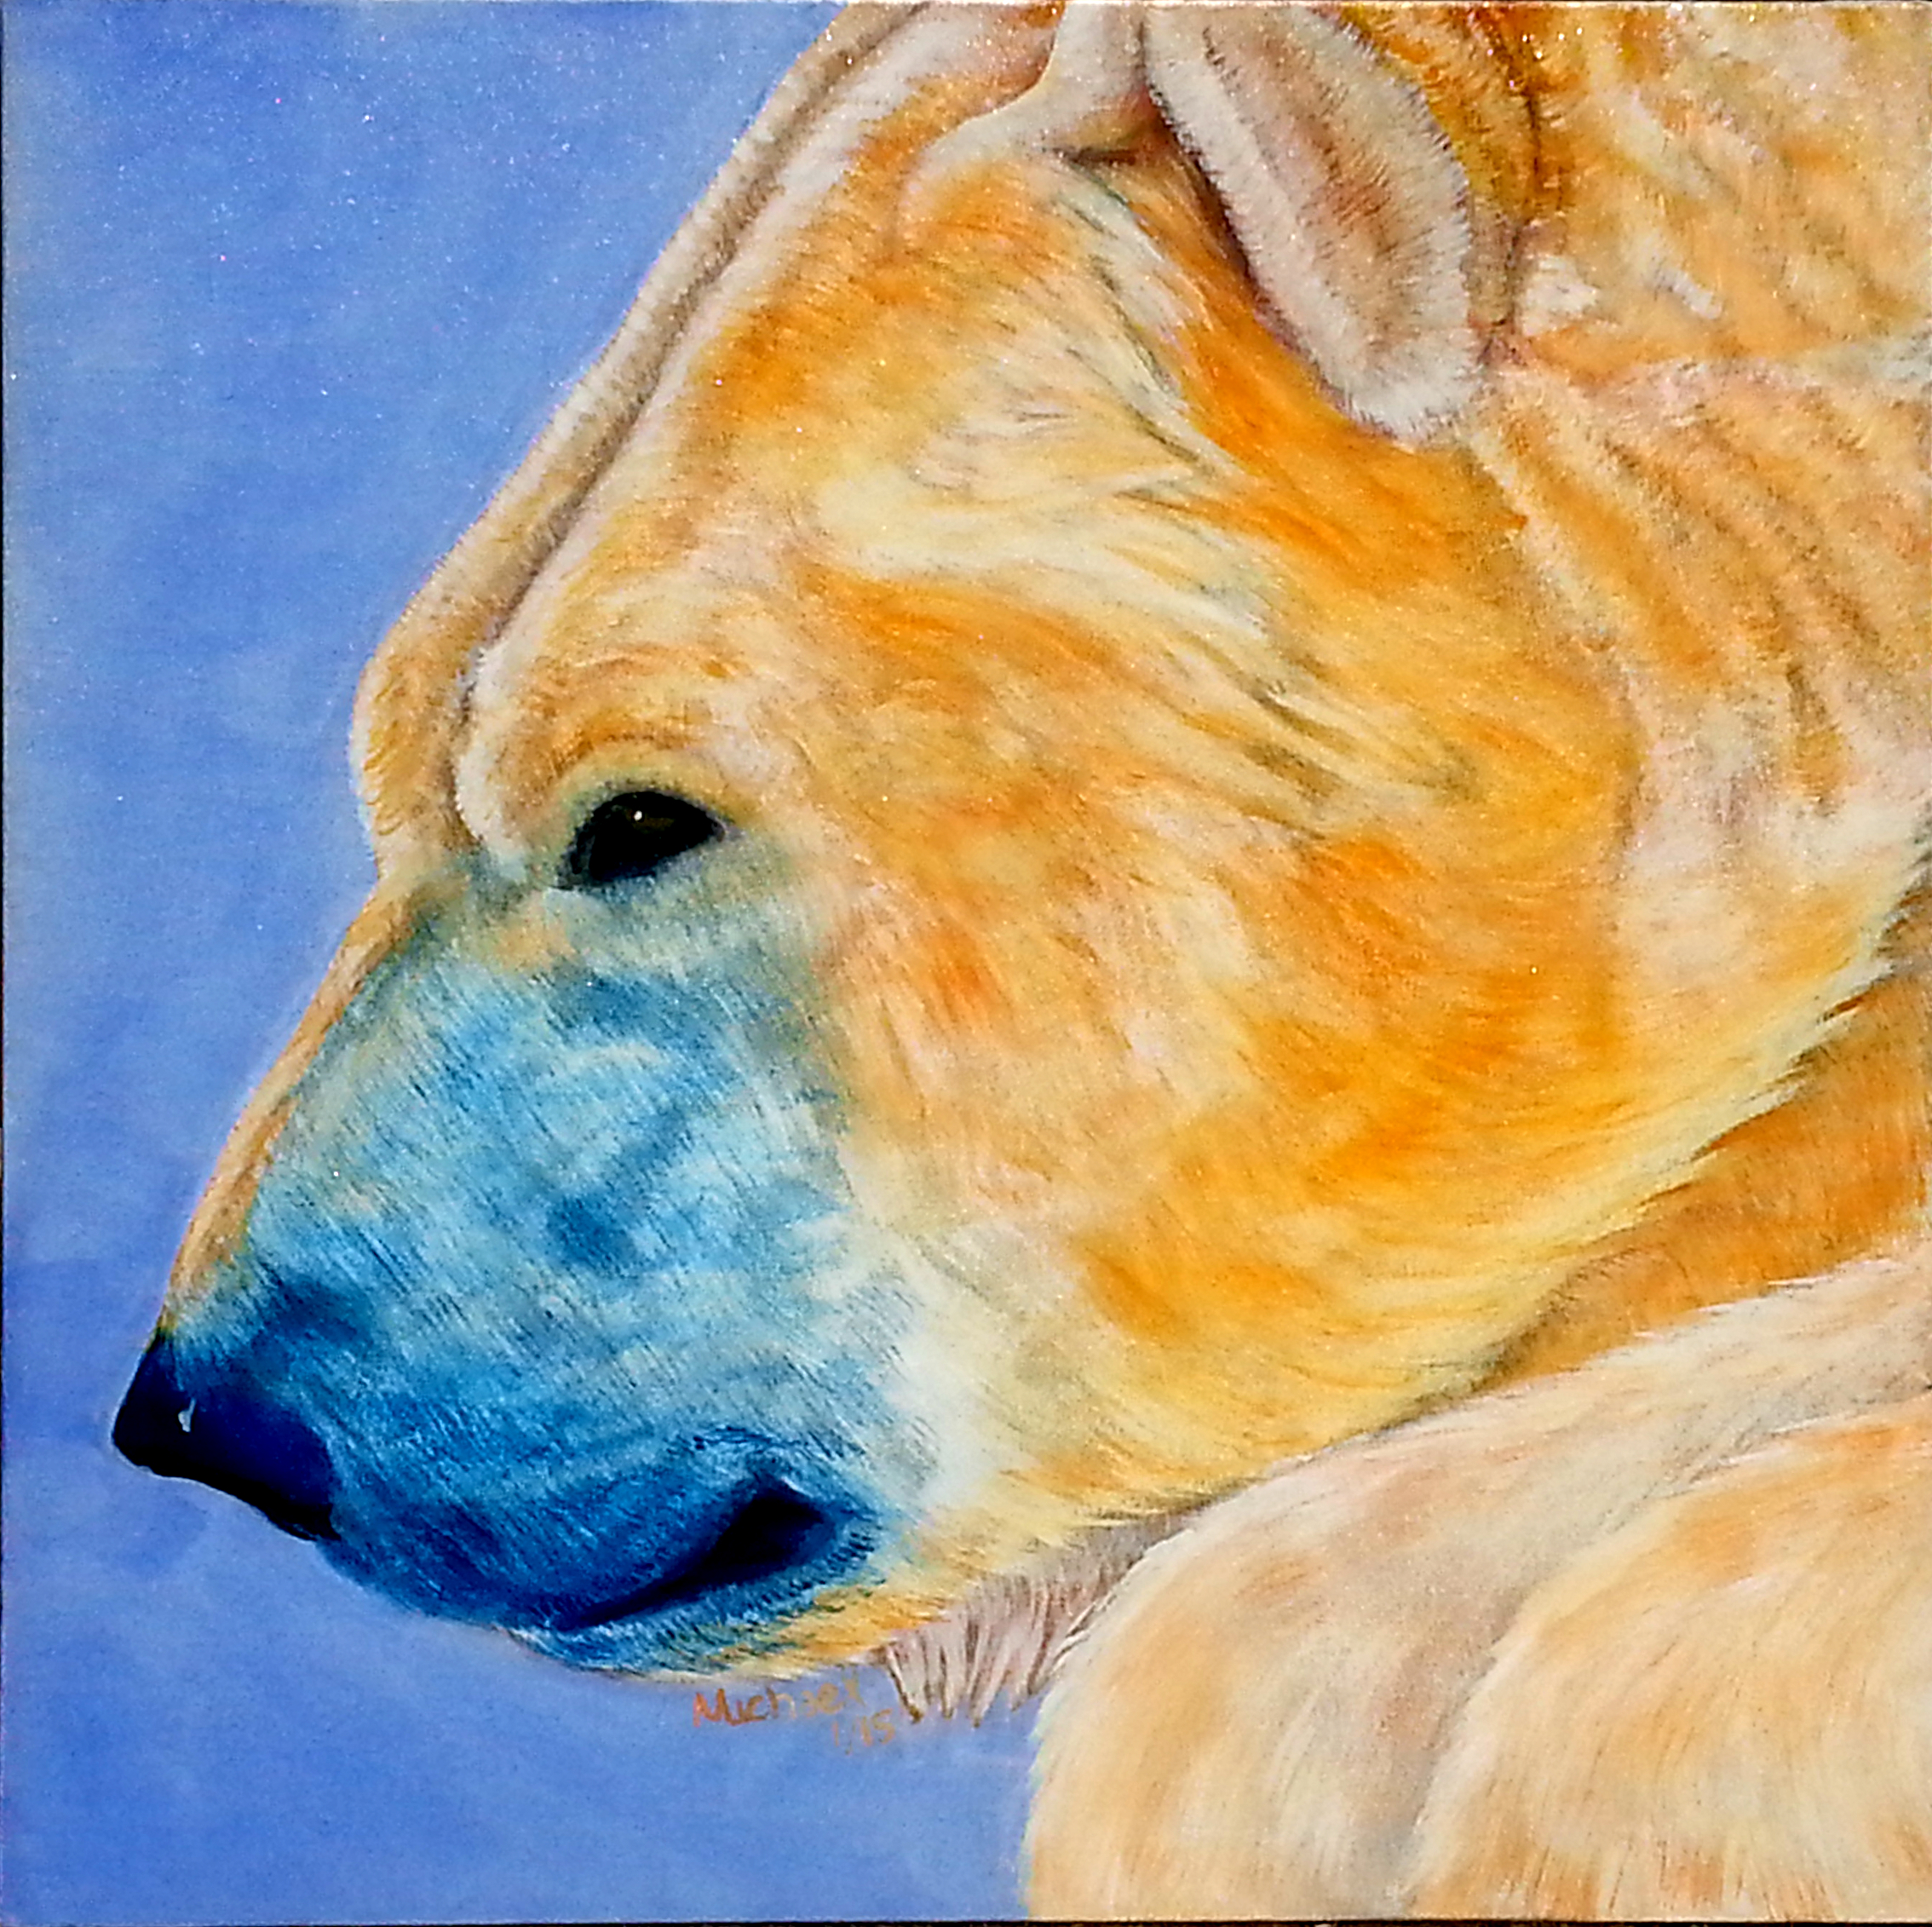 Original Acrylic painting Bear Original acrylic painting polar bear